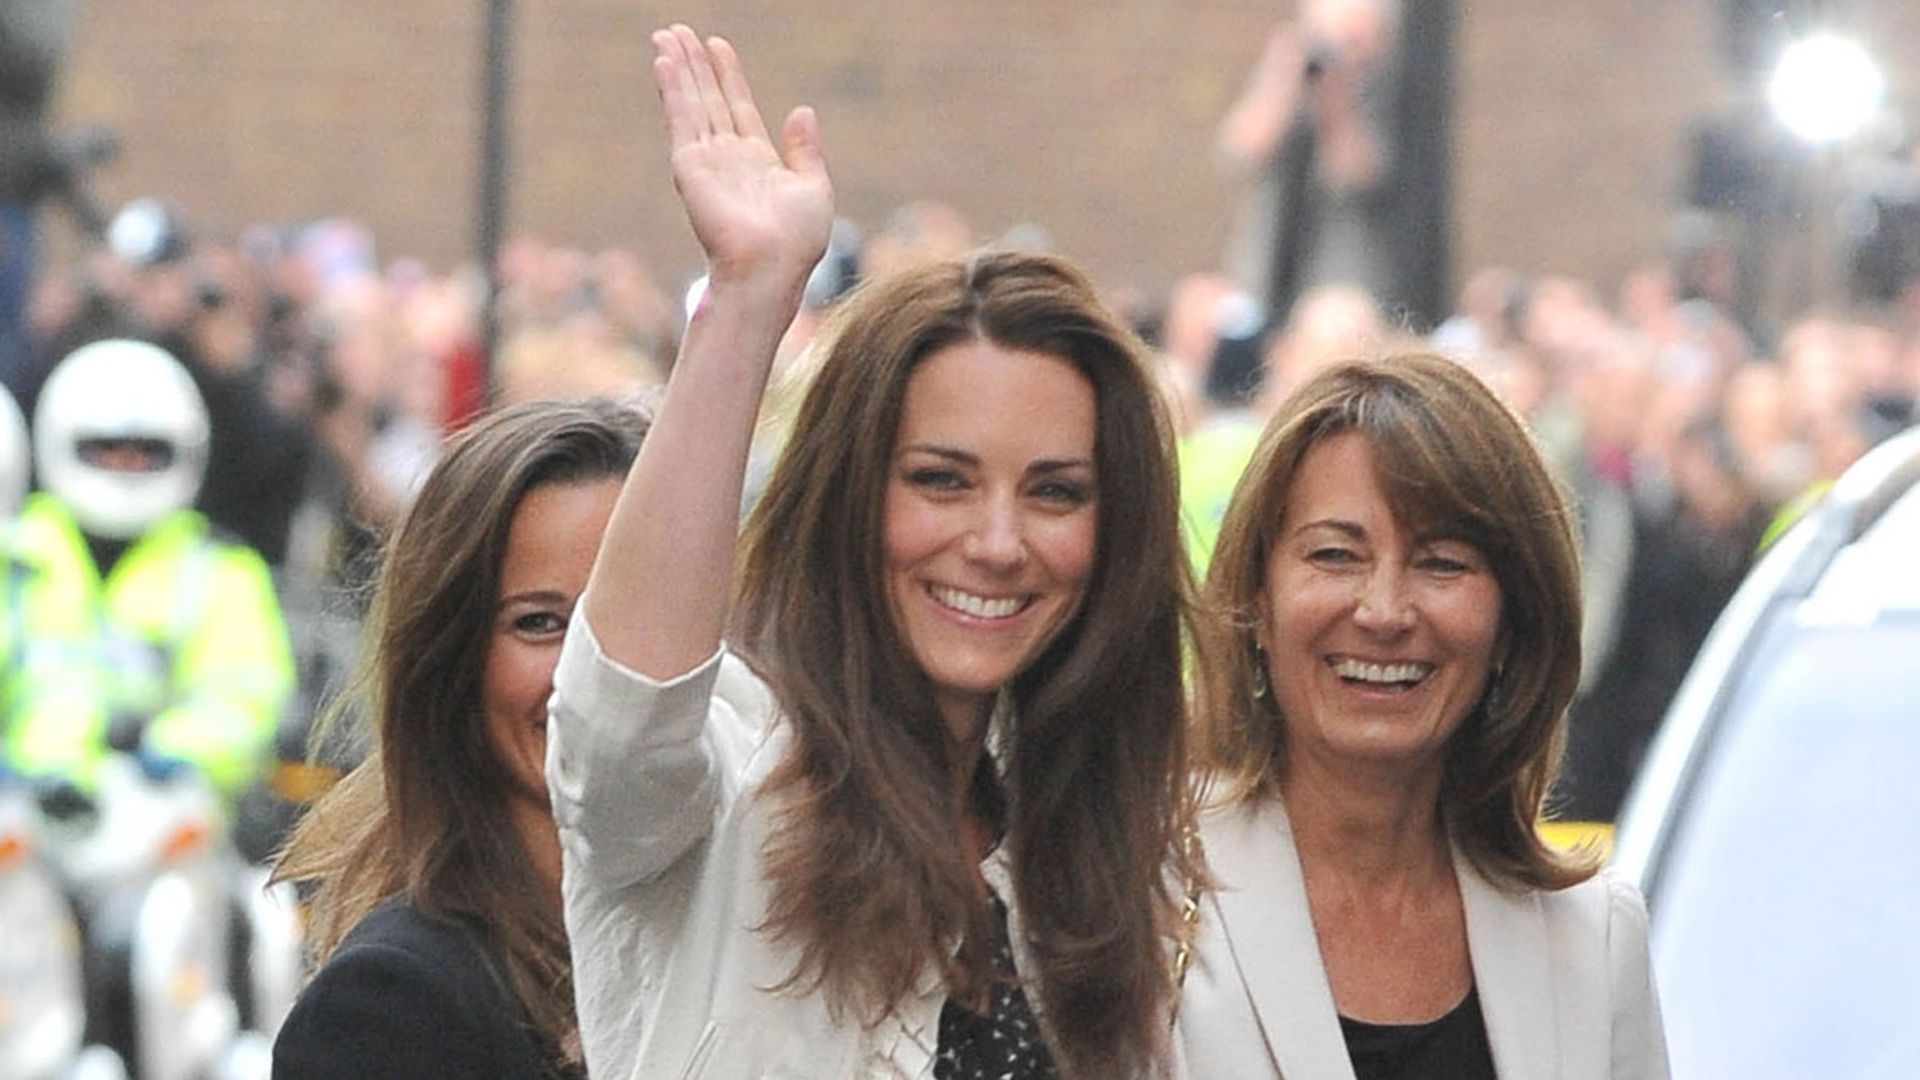 How Kate Middleton's fifth birthday inspired mum Carole Middleton